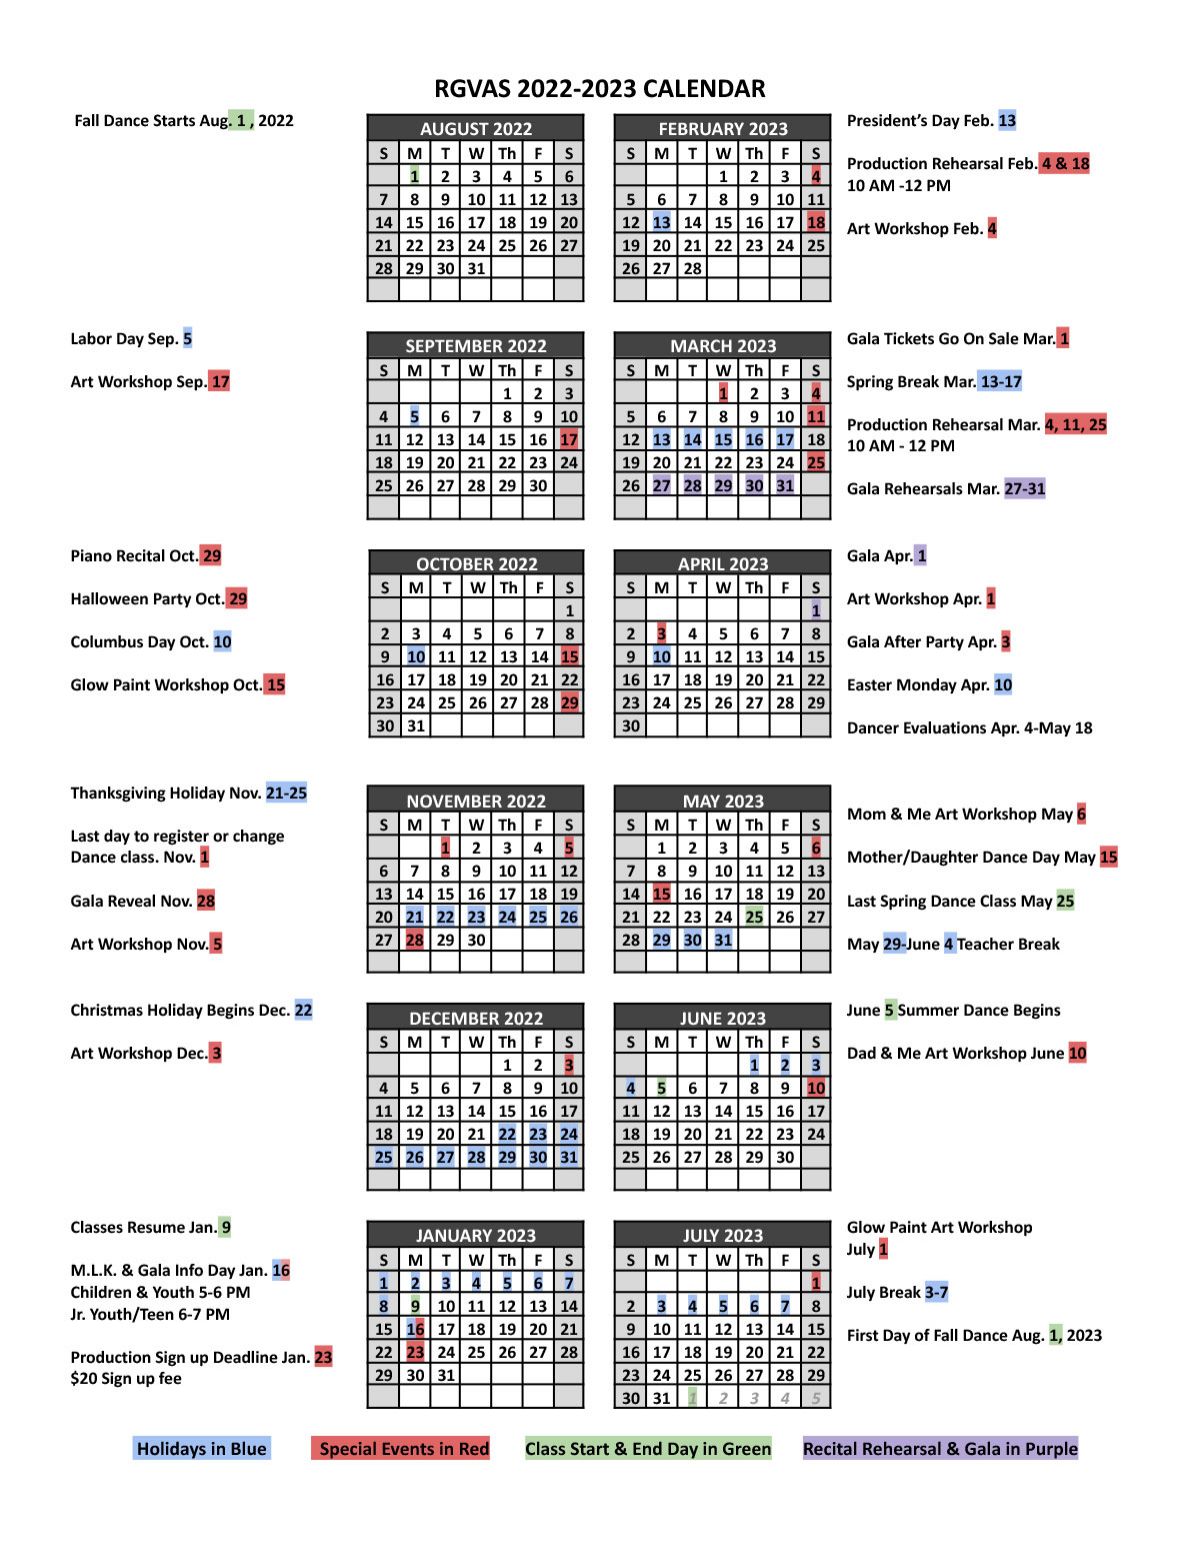 Copy of 2022 2023 Calendar